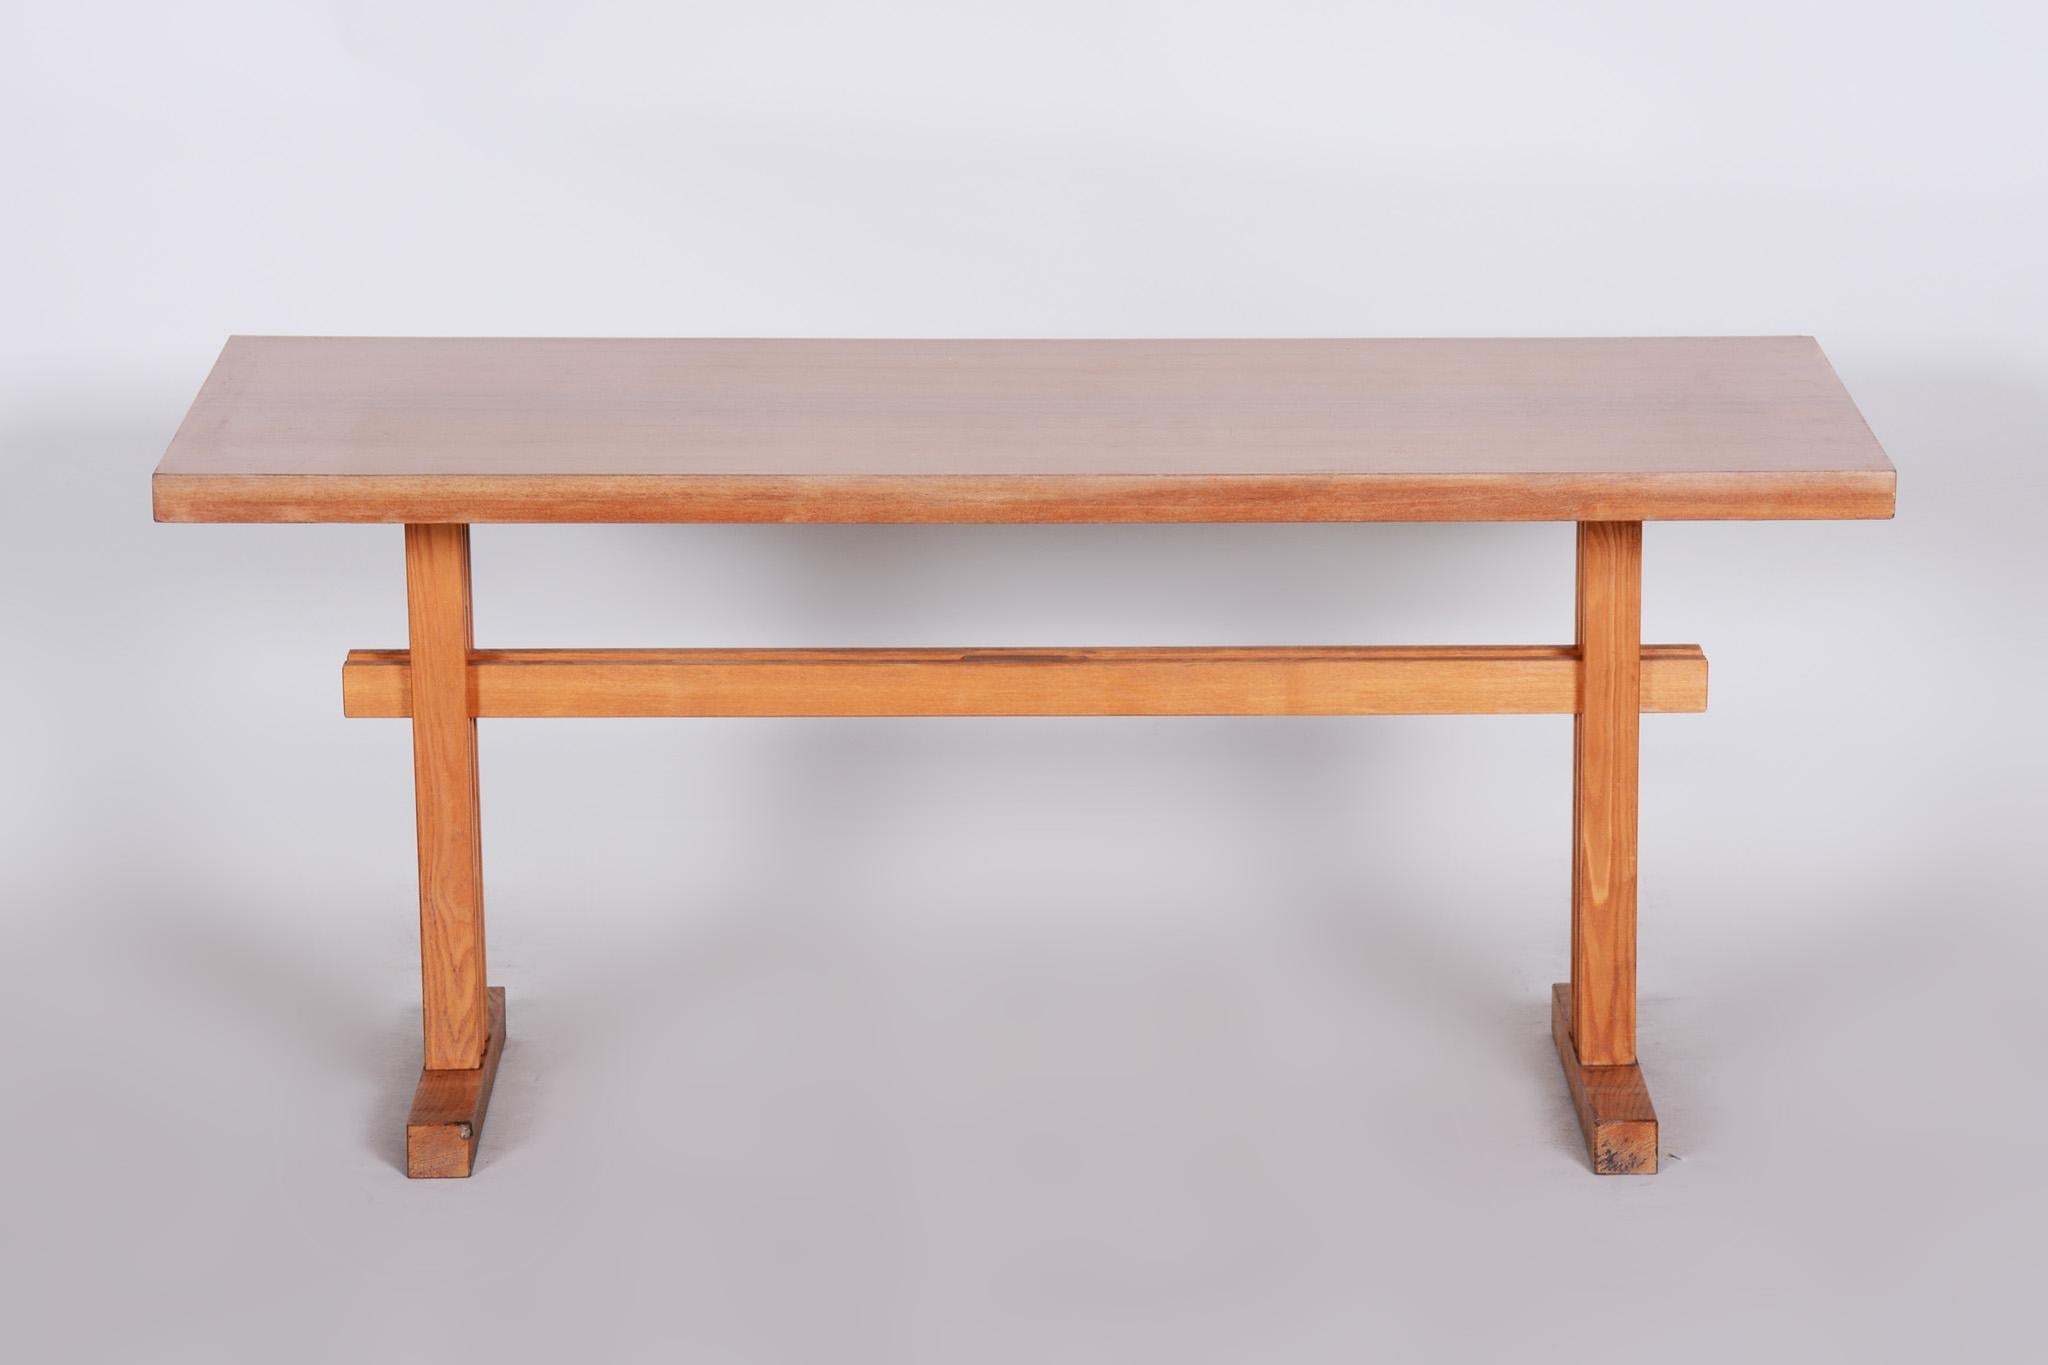 Beech and oak table
Czech midcentury
Material: Oak
Period: 1960-1969.